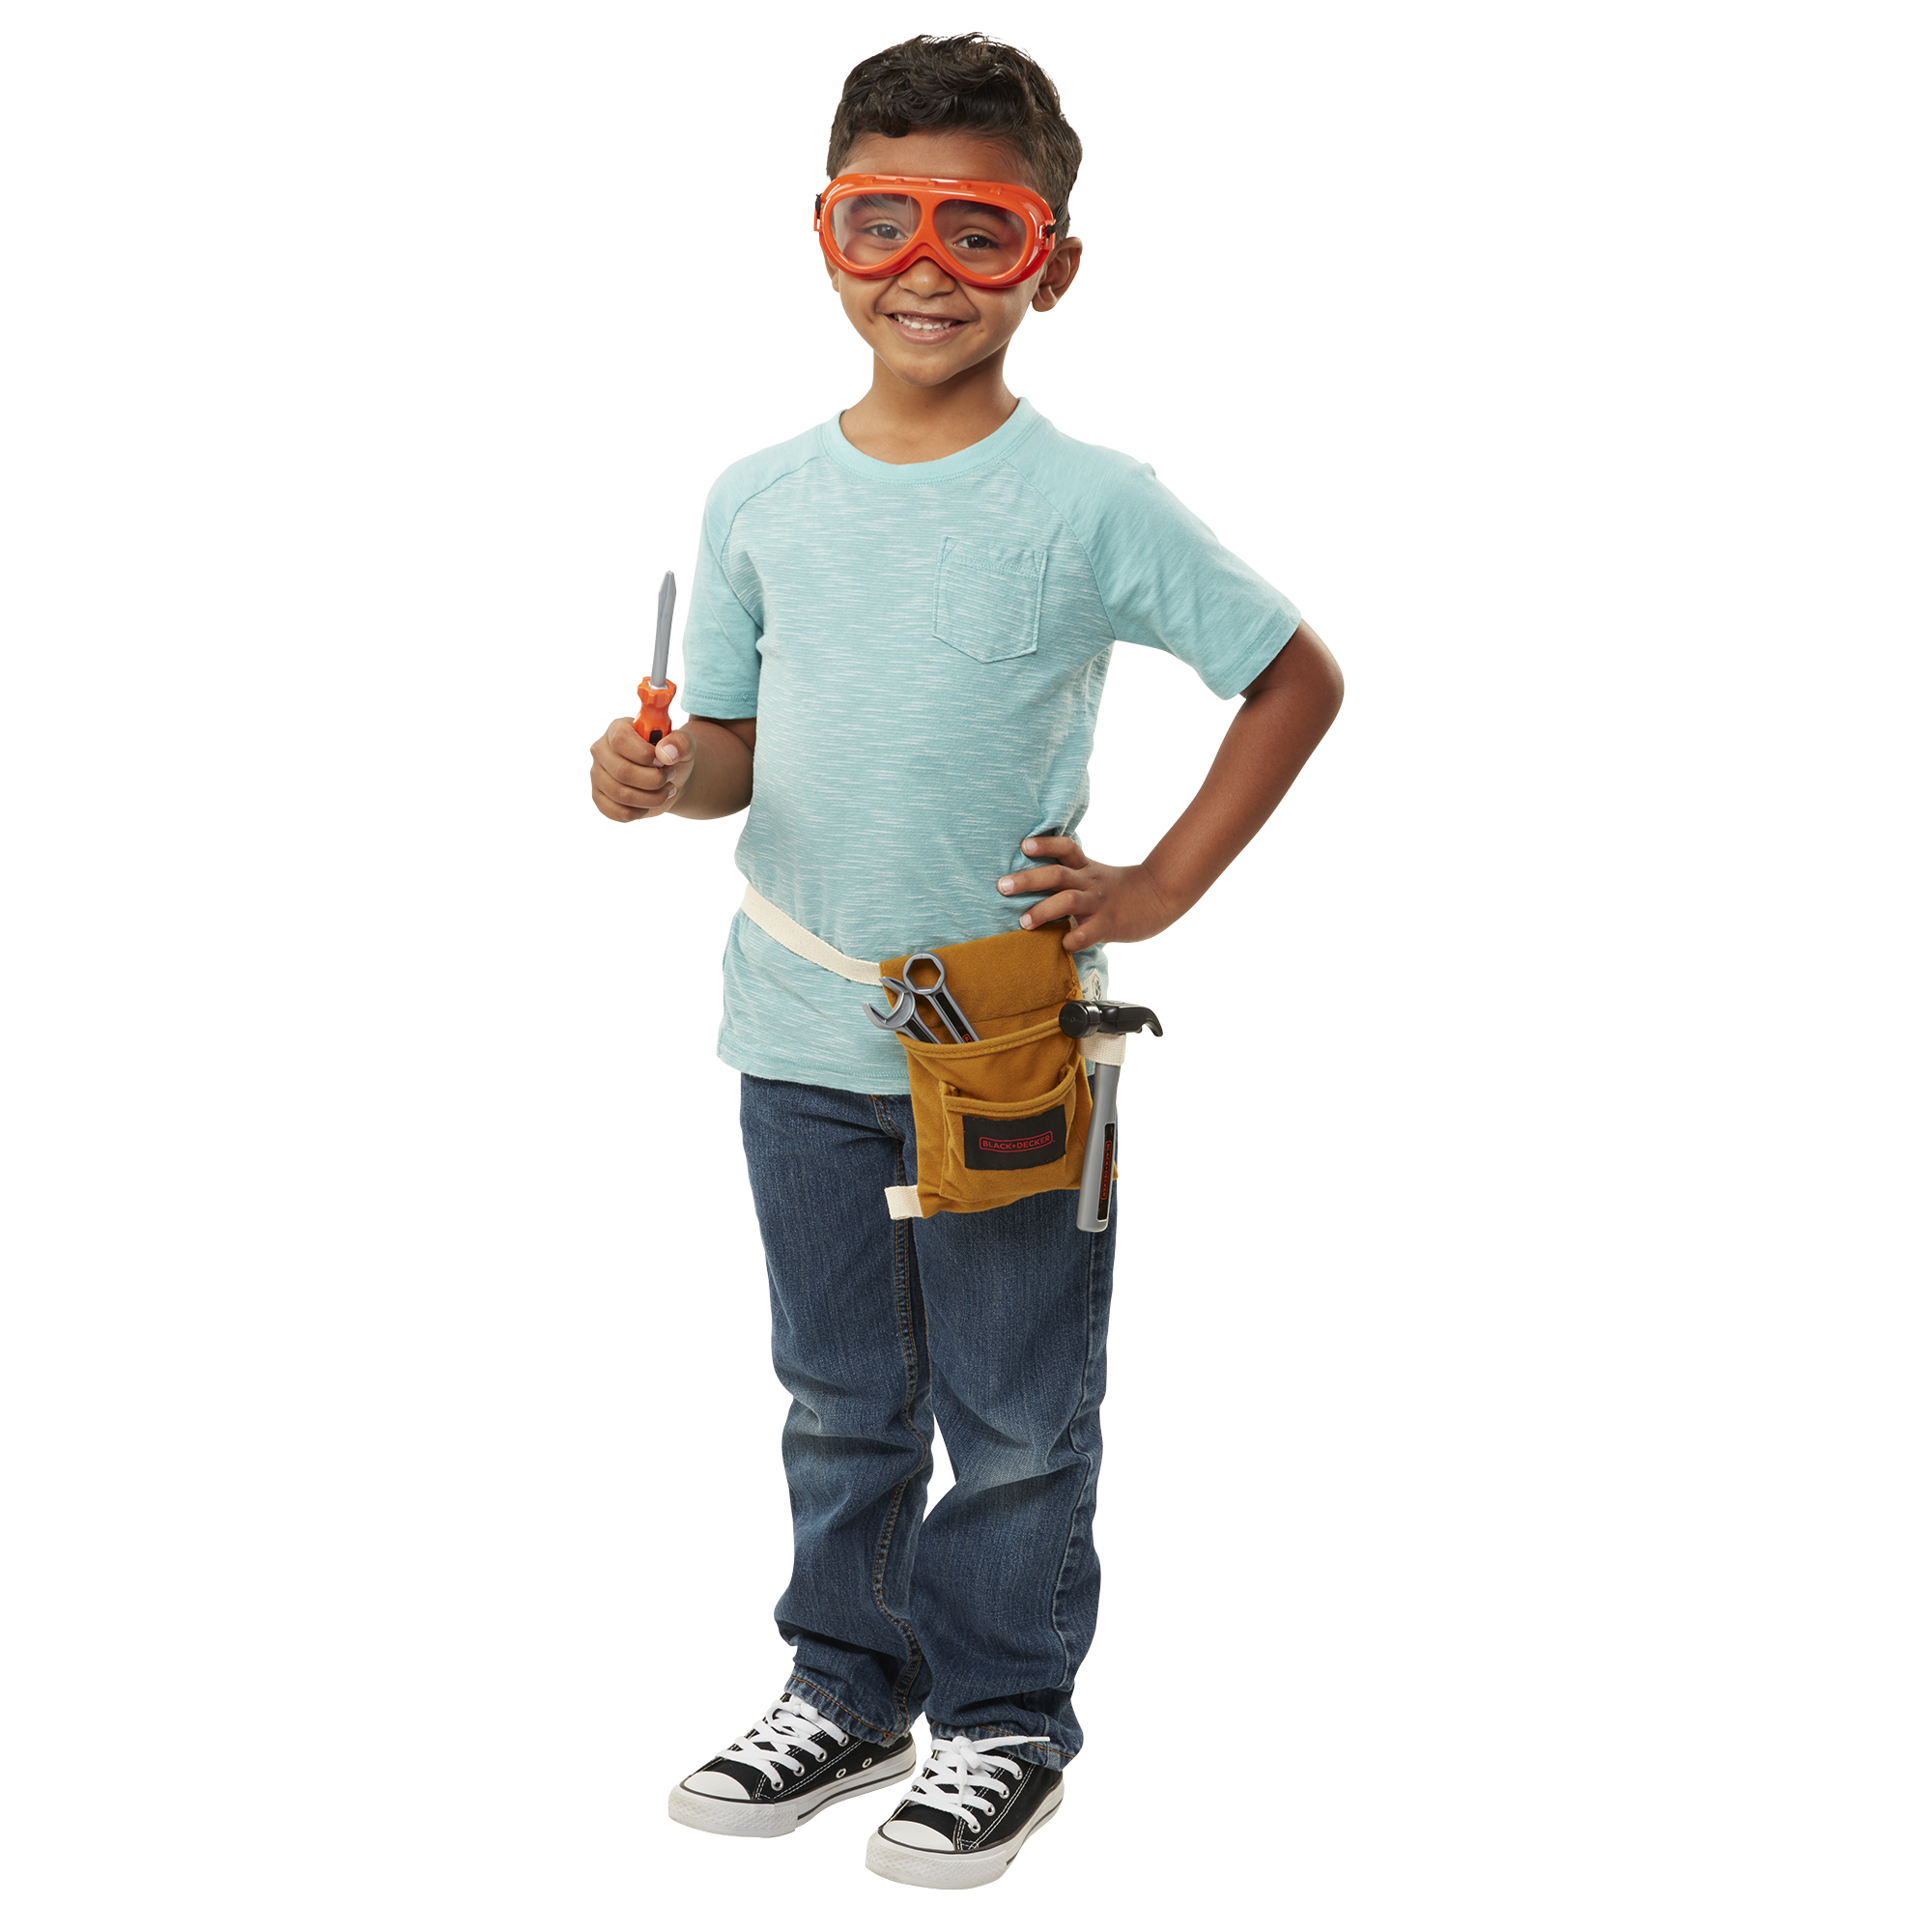 Junior Ready to Build Workbench - JAKKS Pacific, Inc.